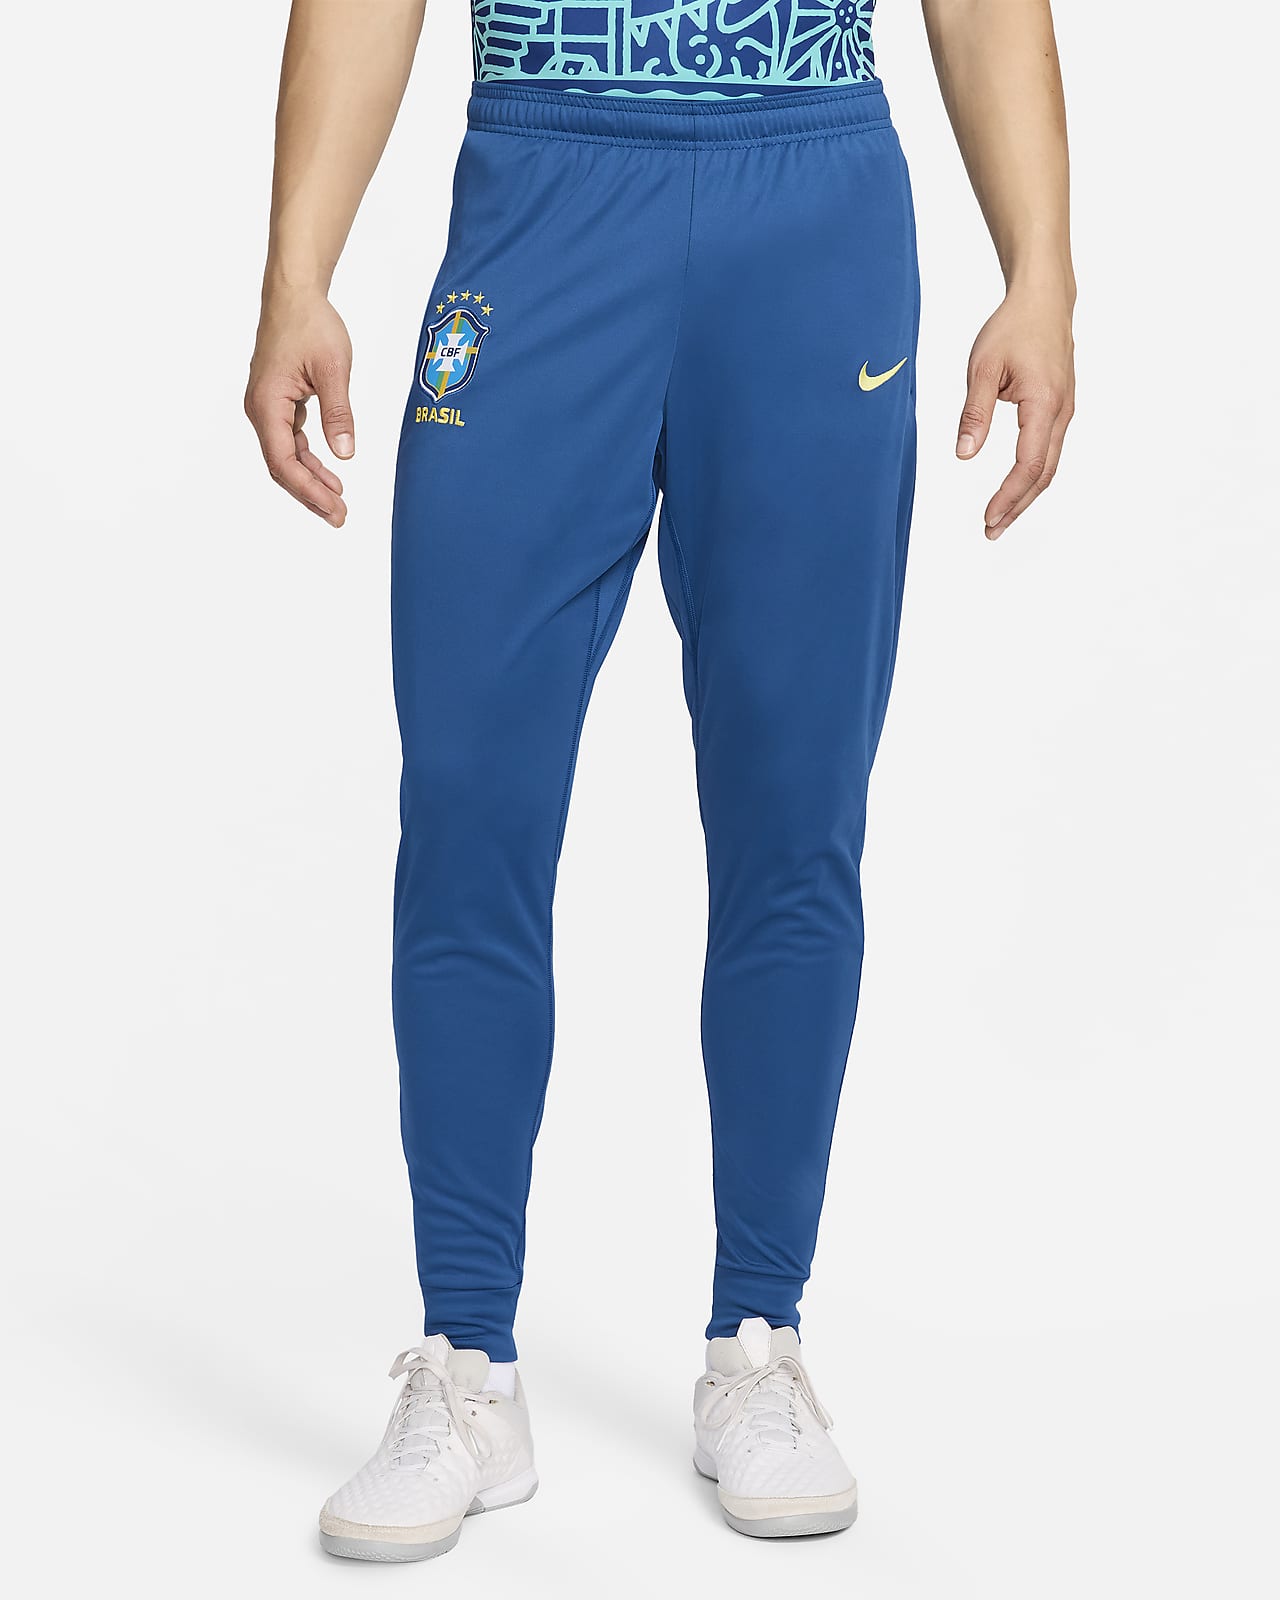 Brazil Academy Pro Men's Nike Dri-FIT Soccer Track Pants